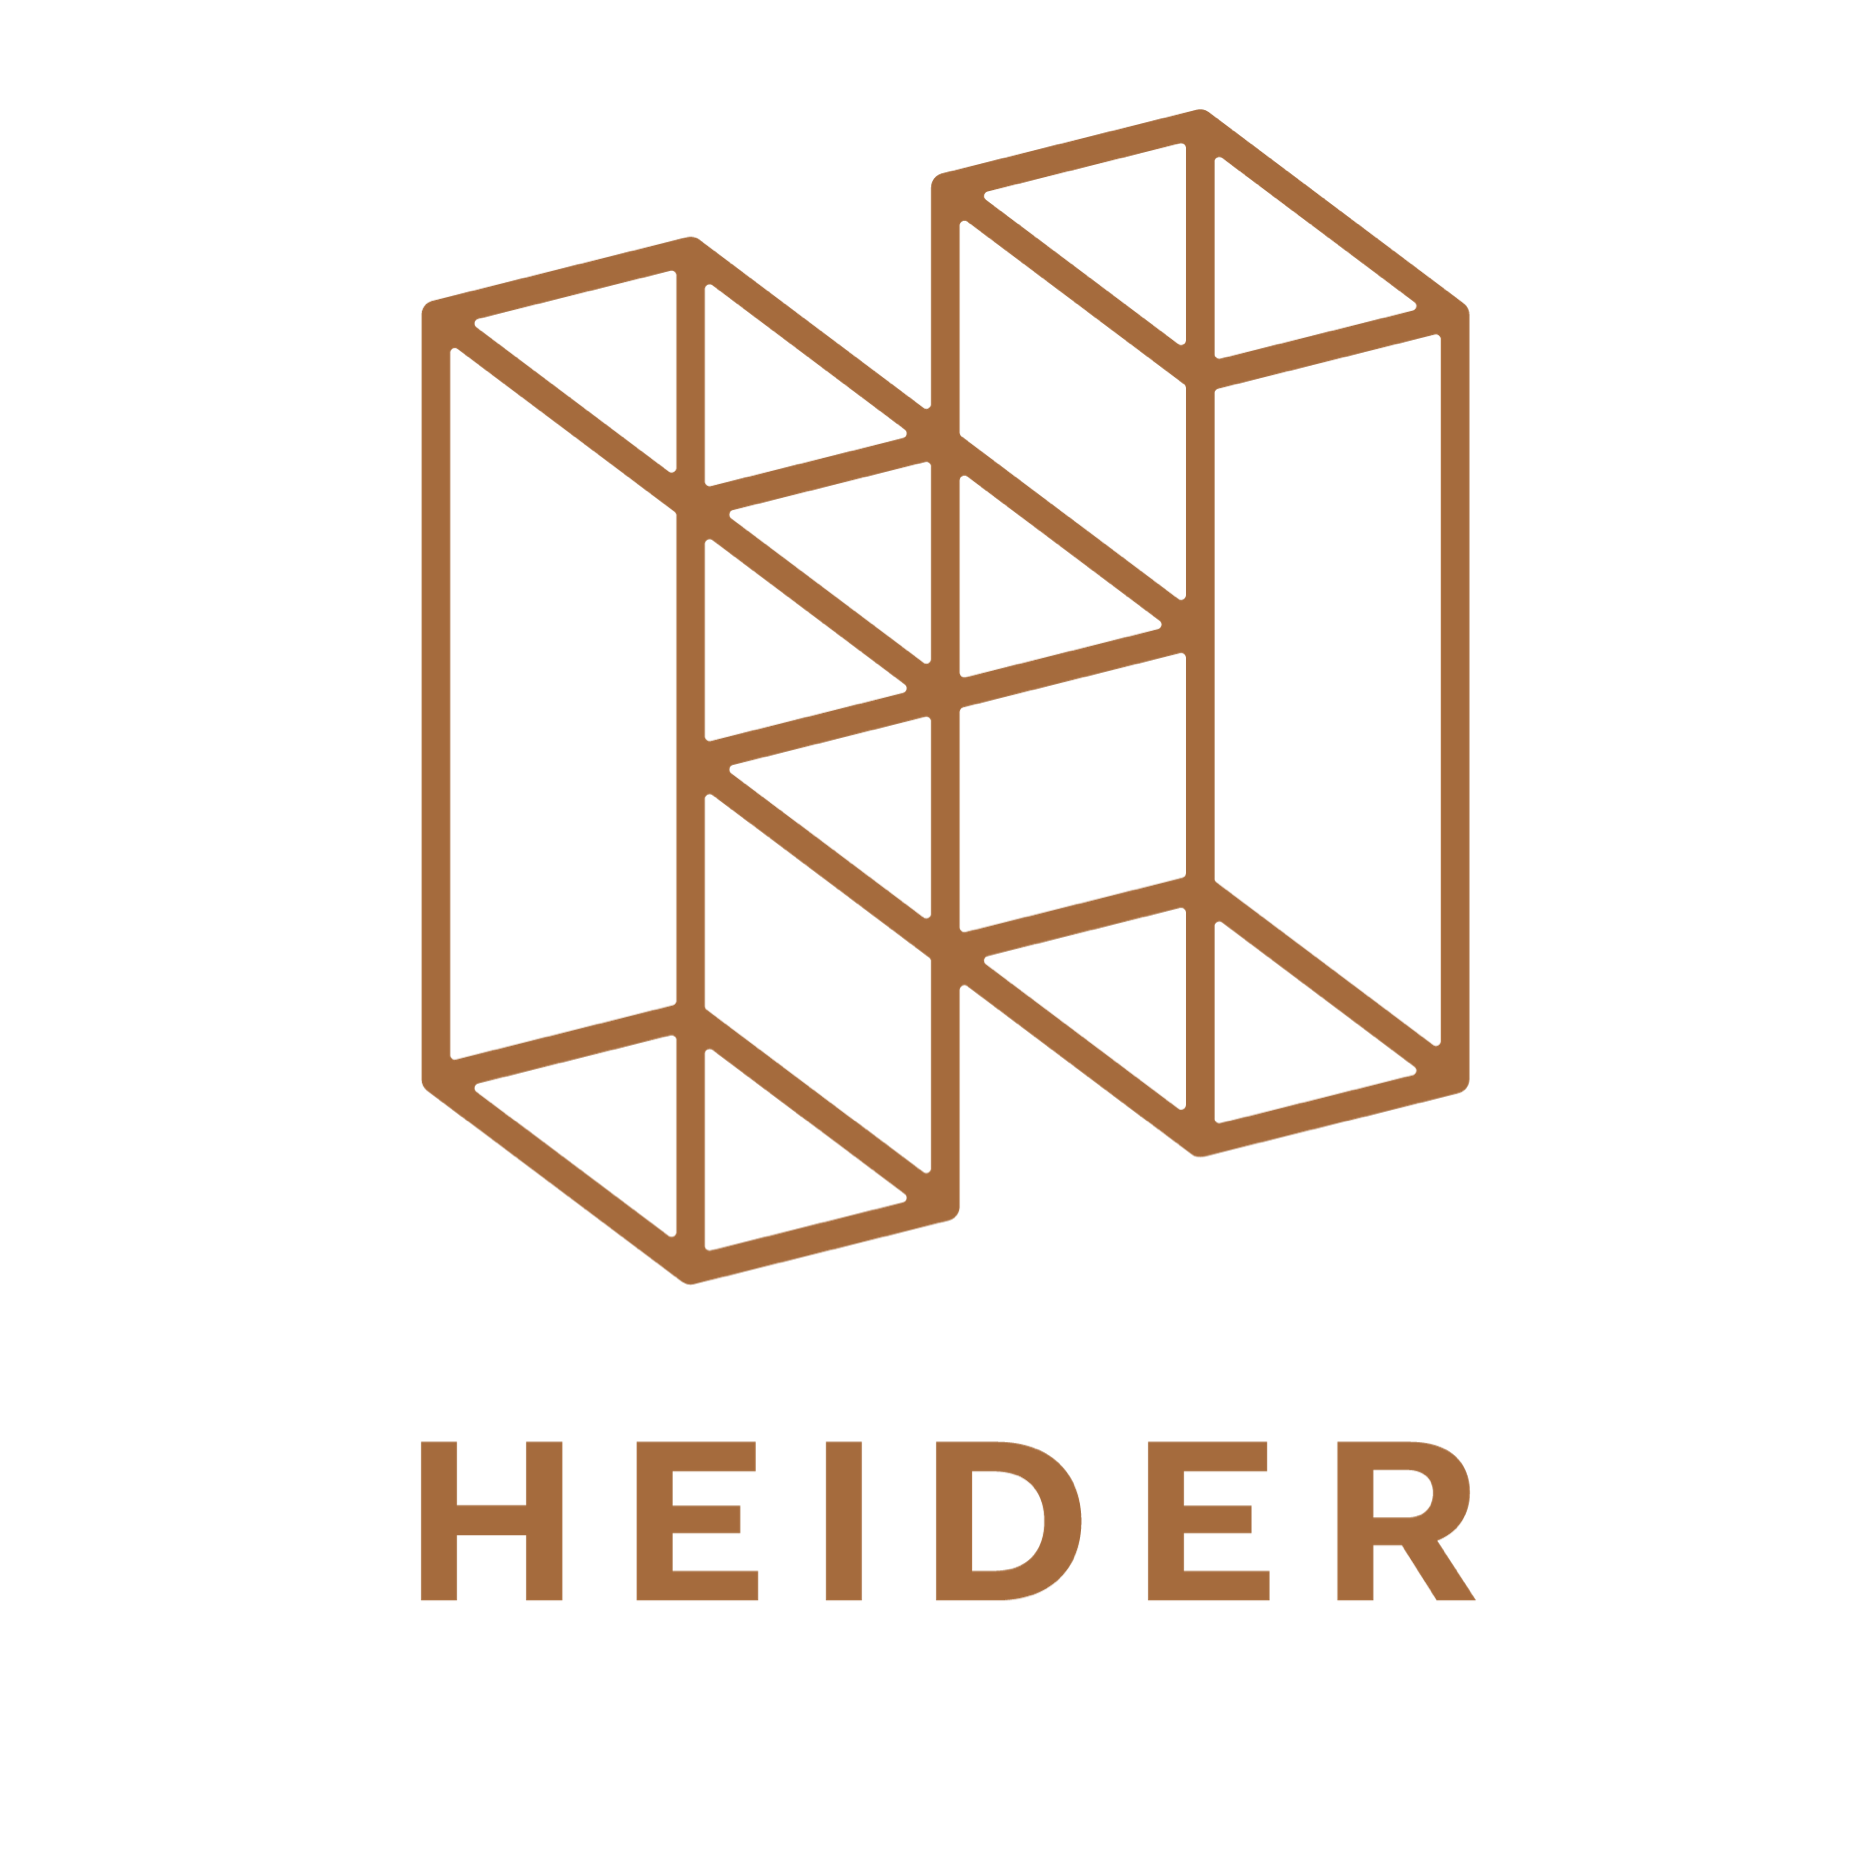 HEIDER Real Estate | TTR Sotheby's International Realty